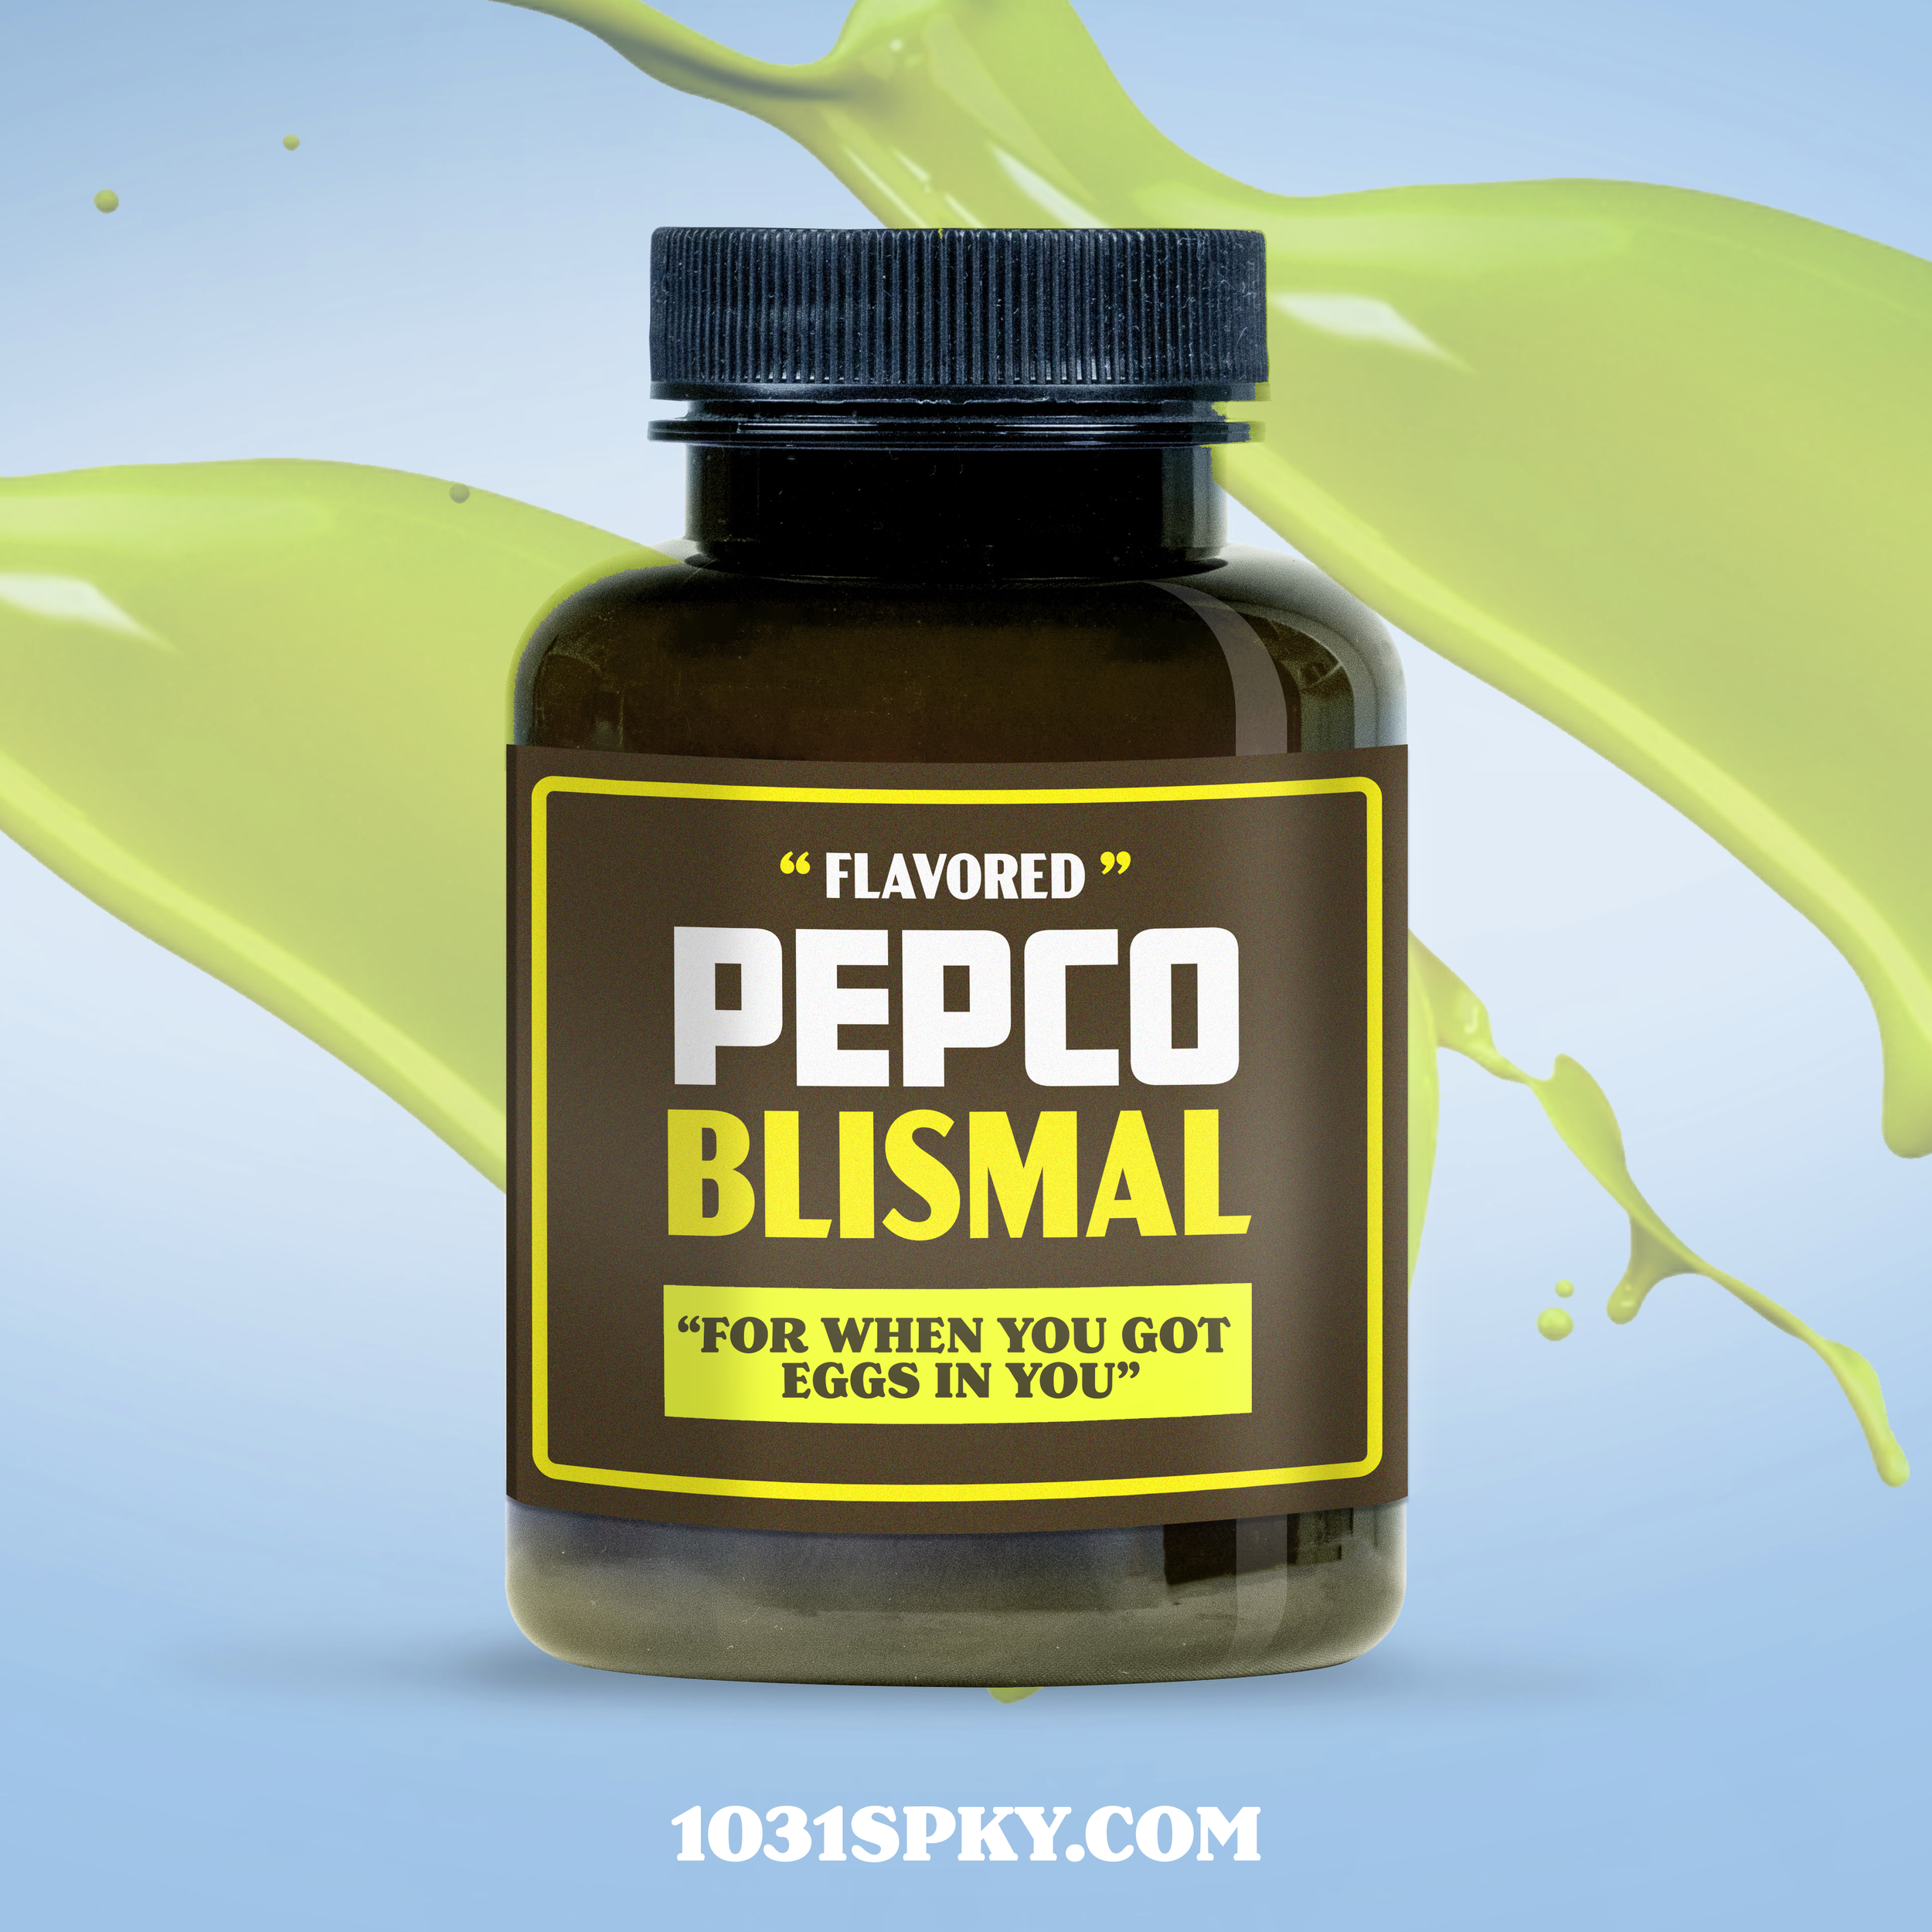 pepco-blismol-final.png